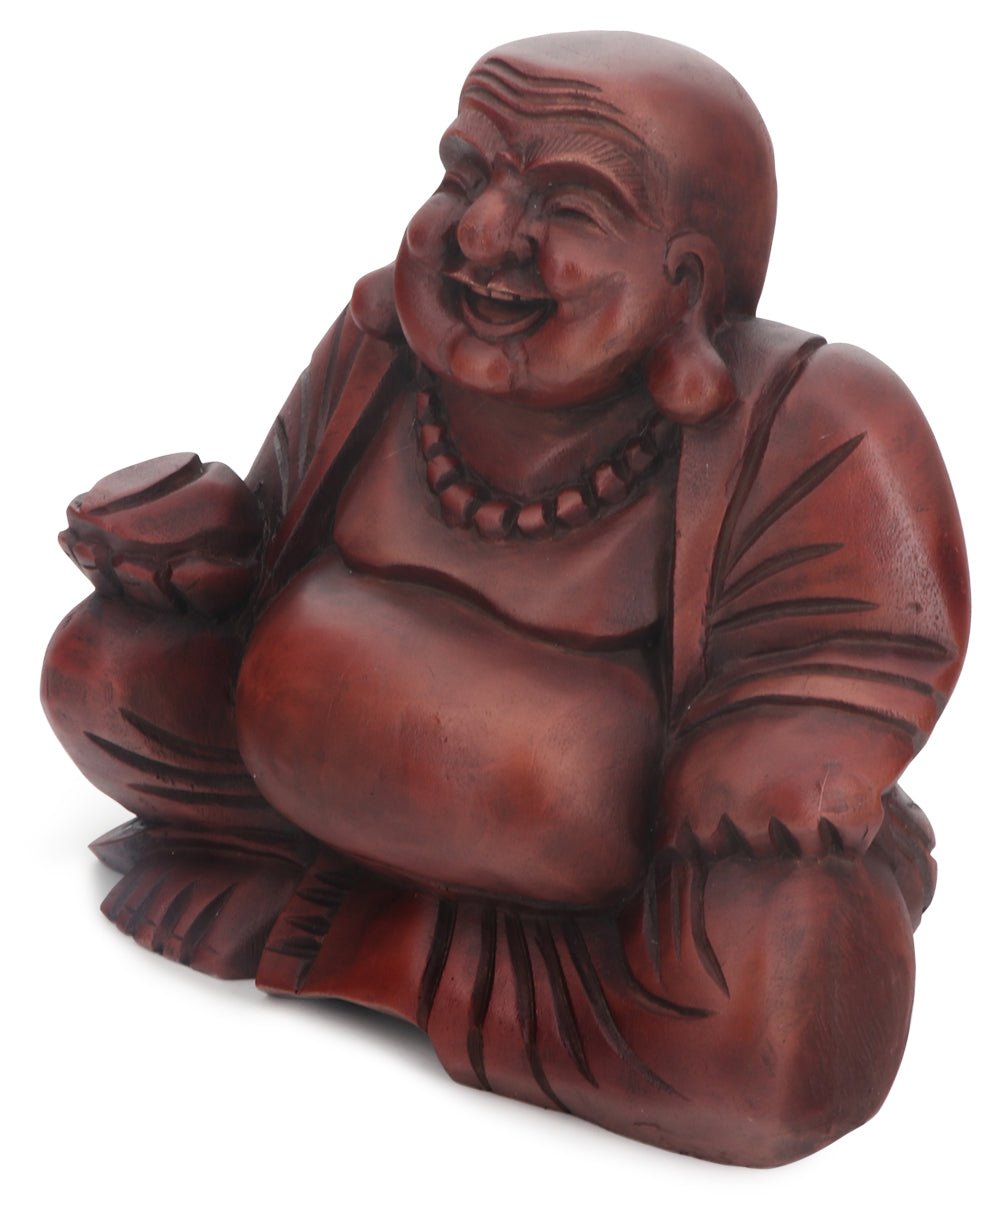 Mahogany Finish Sitting Happy Buddha Statue - Sculptures & Statues